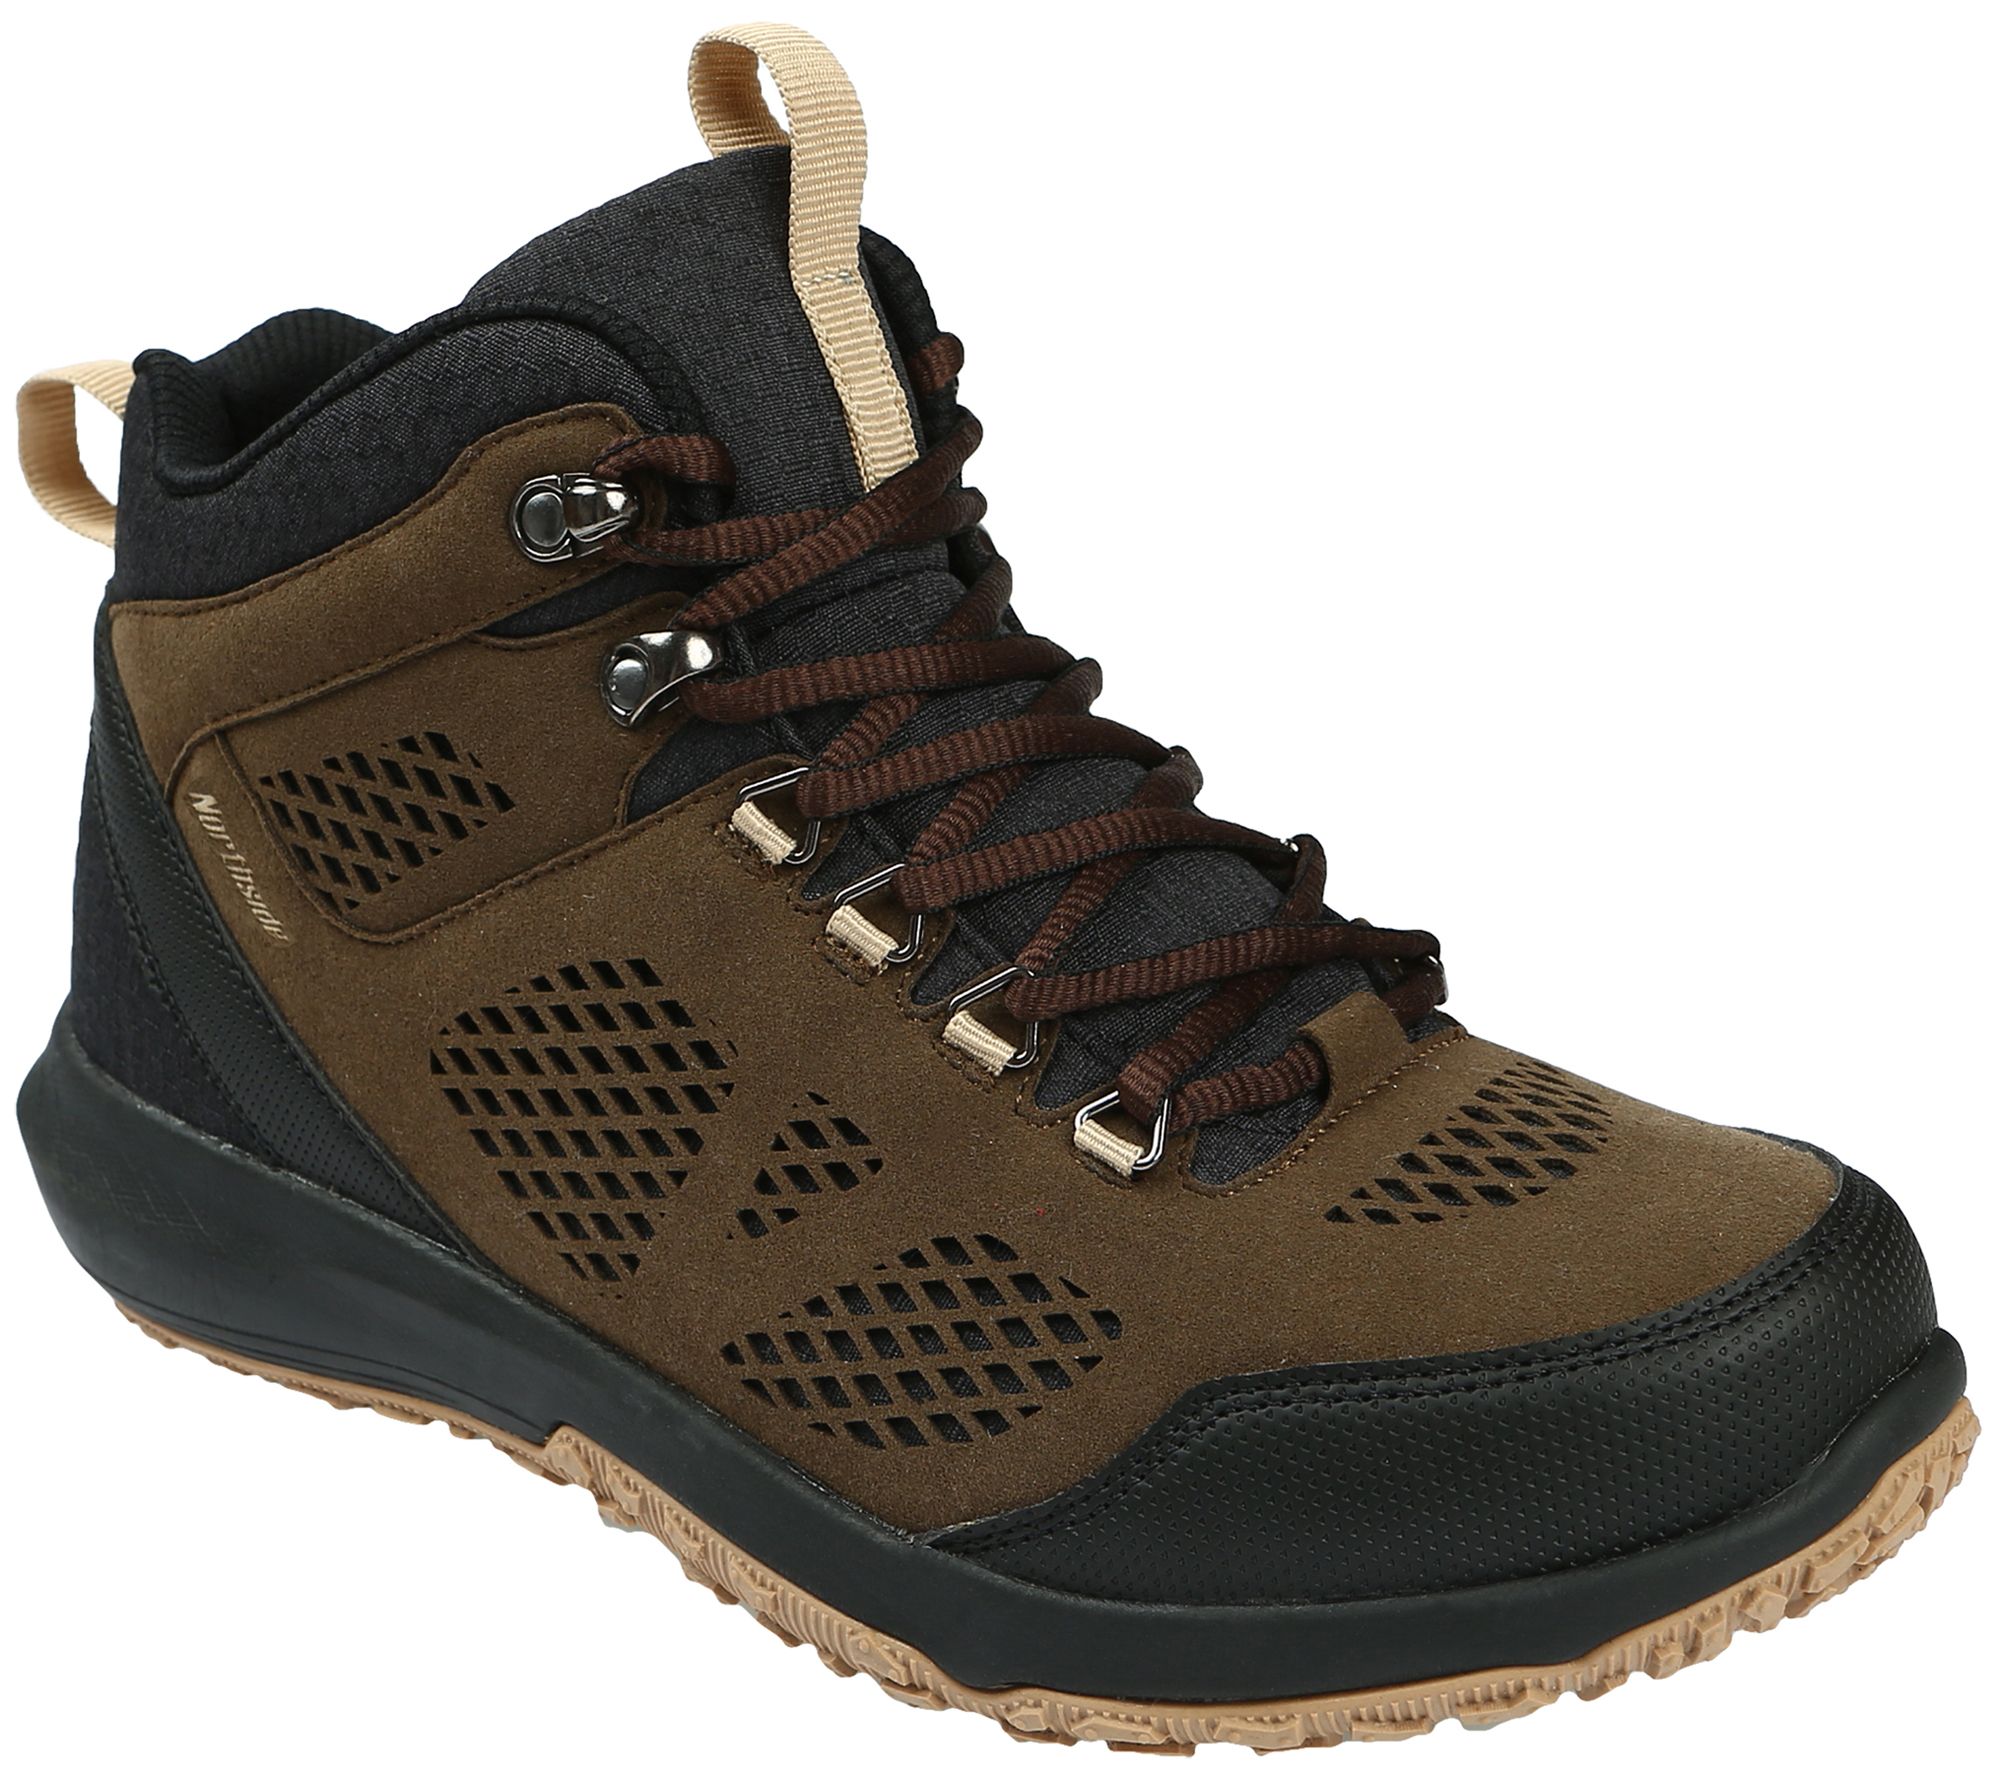 Northside Men's Mid Waterproof Hiking Boots - Benton - QVC.com